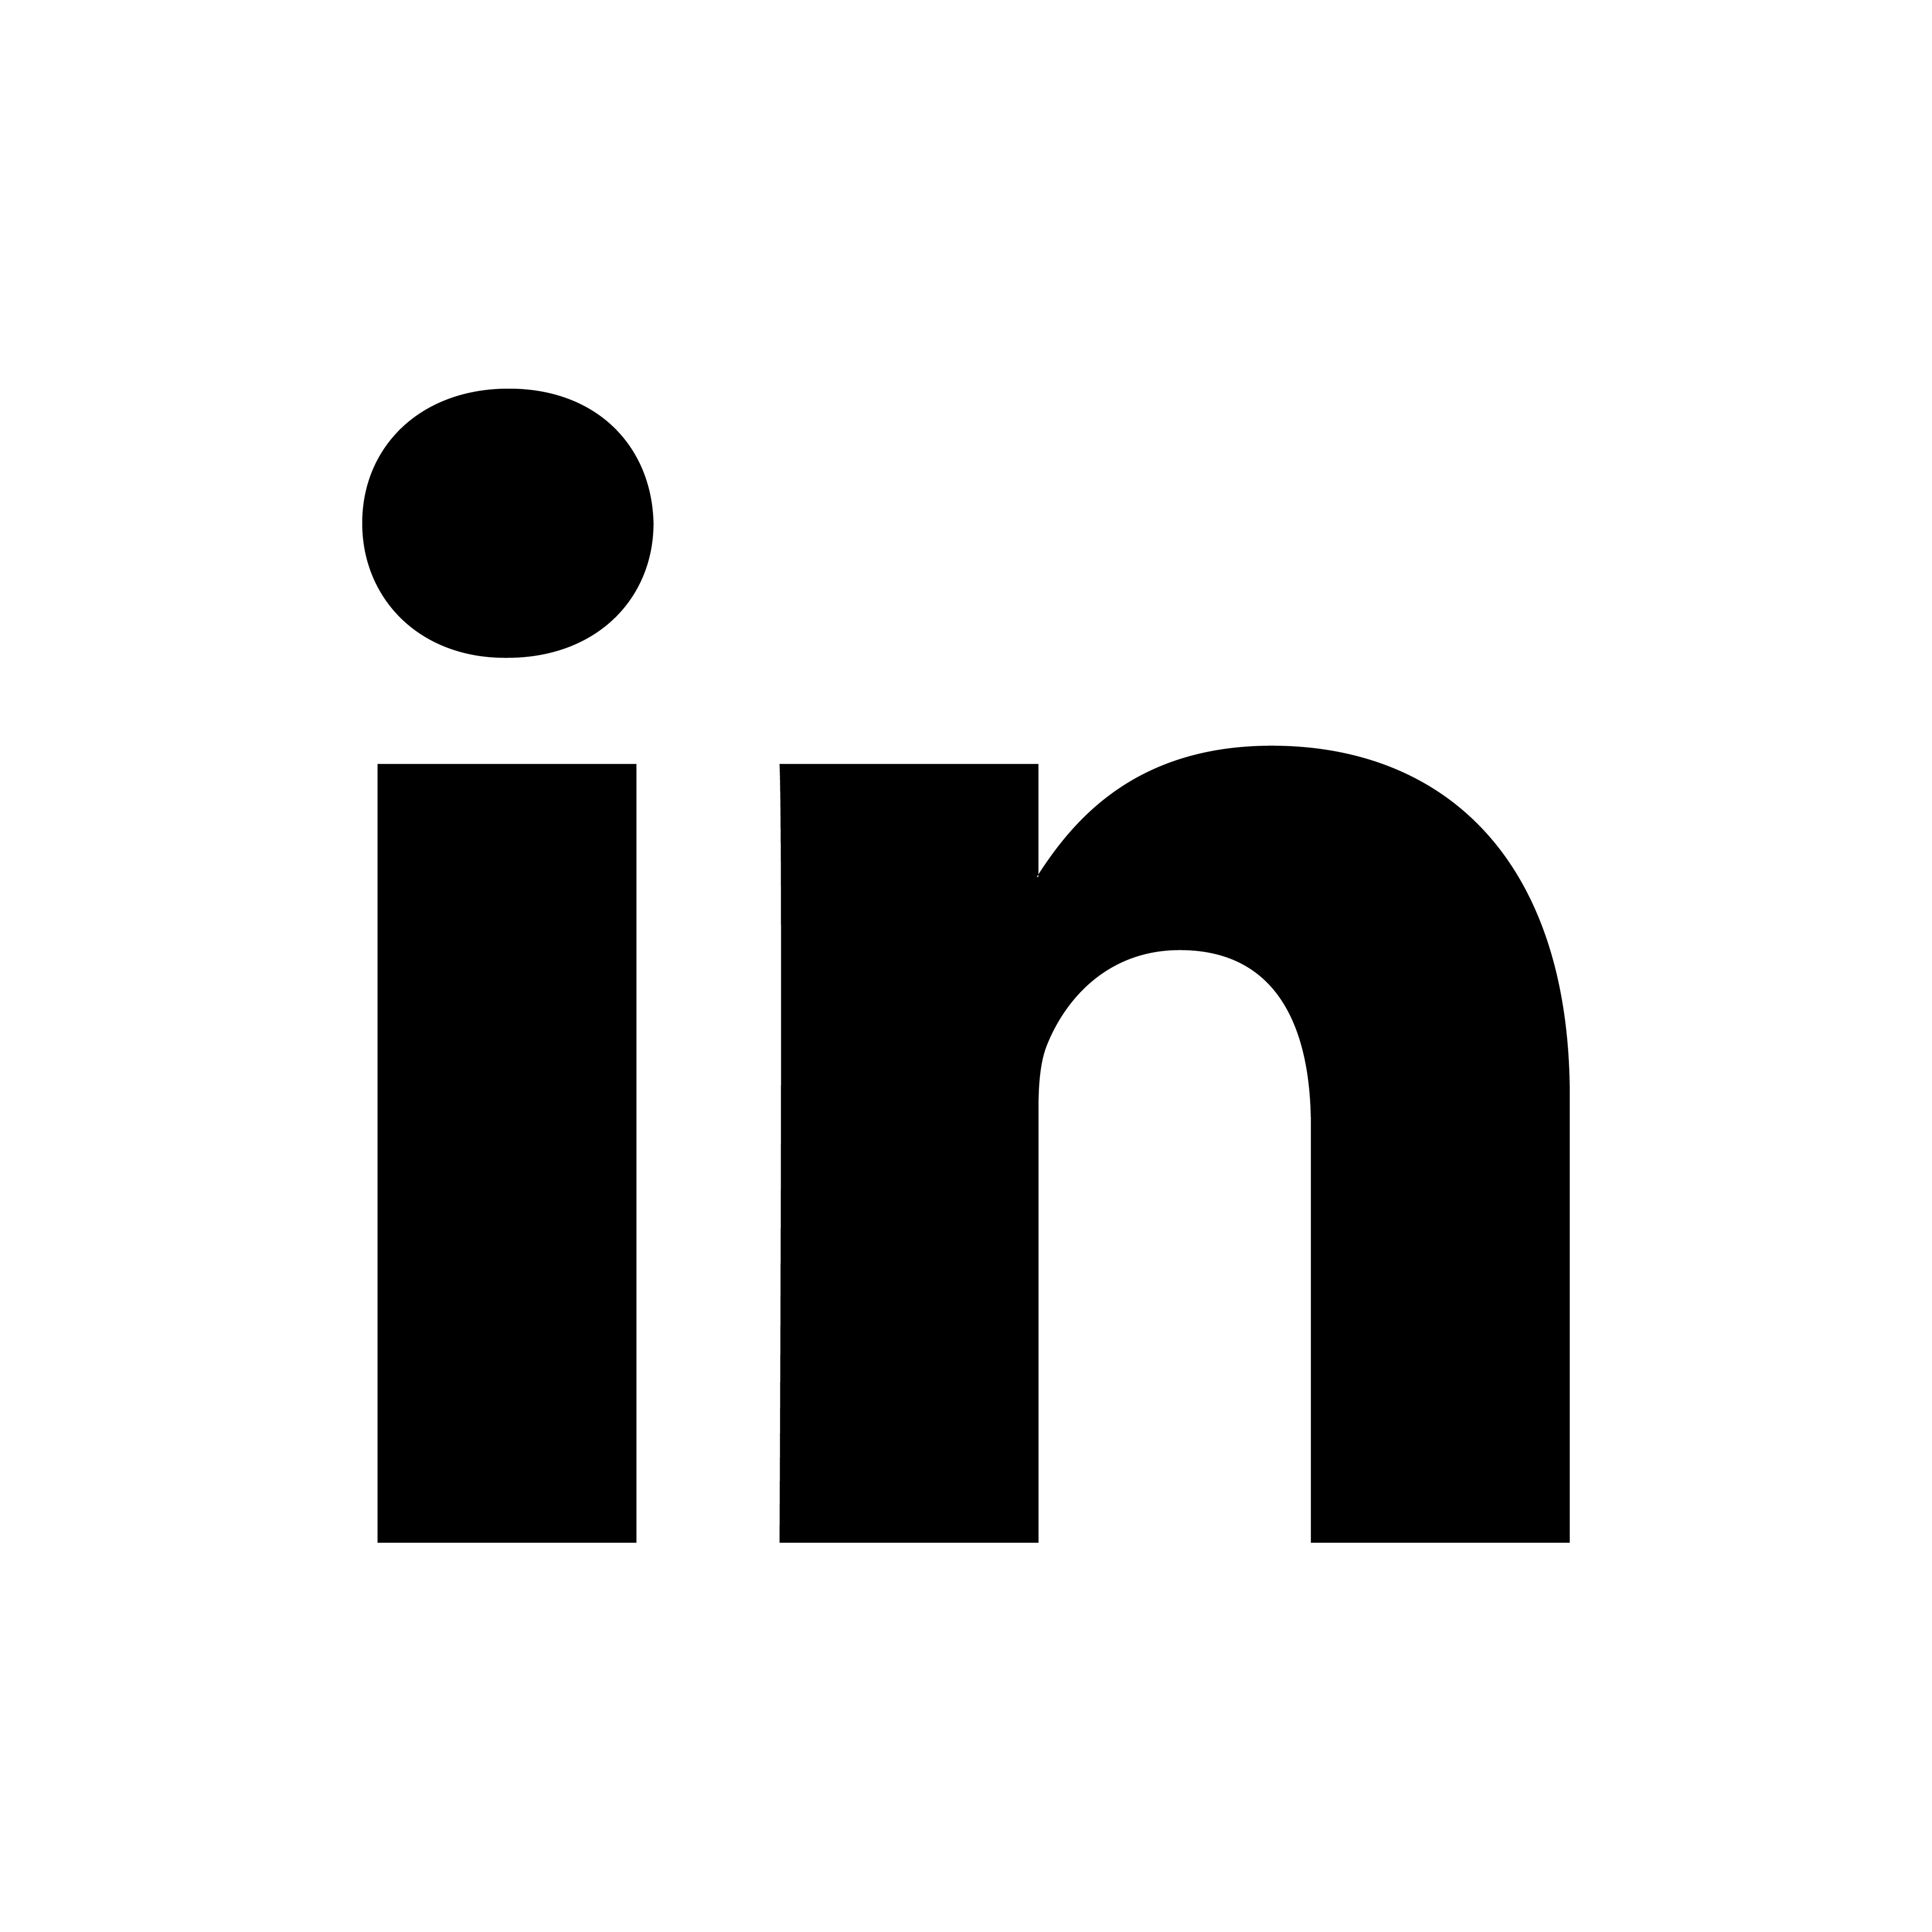 Svg com. Иконка LINKEDIN. LINKEDIN логотип PNG. Иконка LINKEDIN svg. Логотип in.